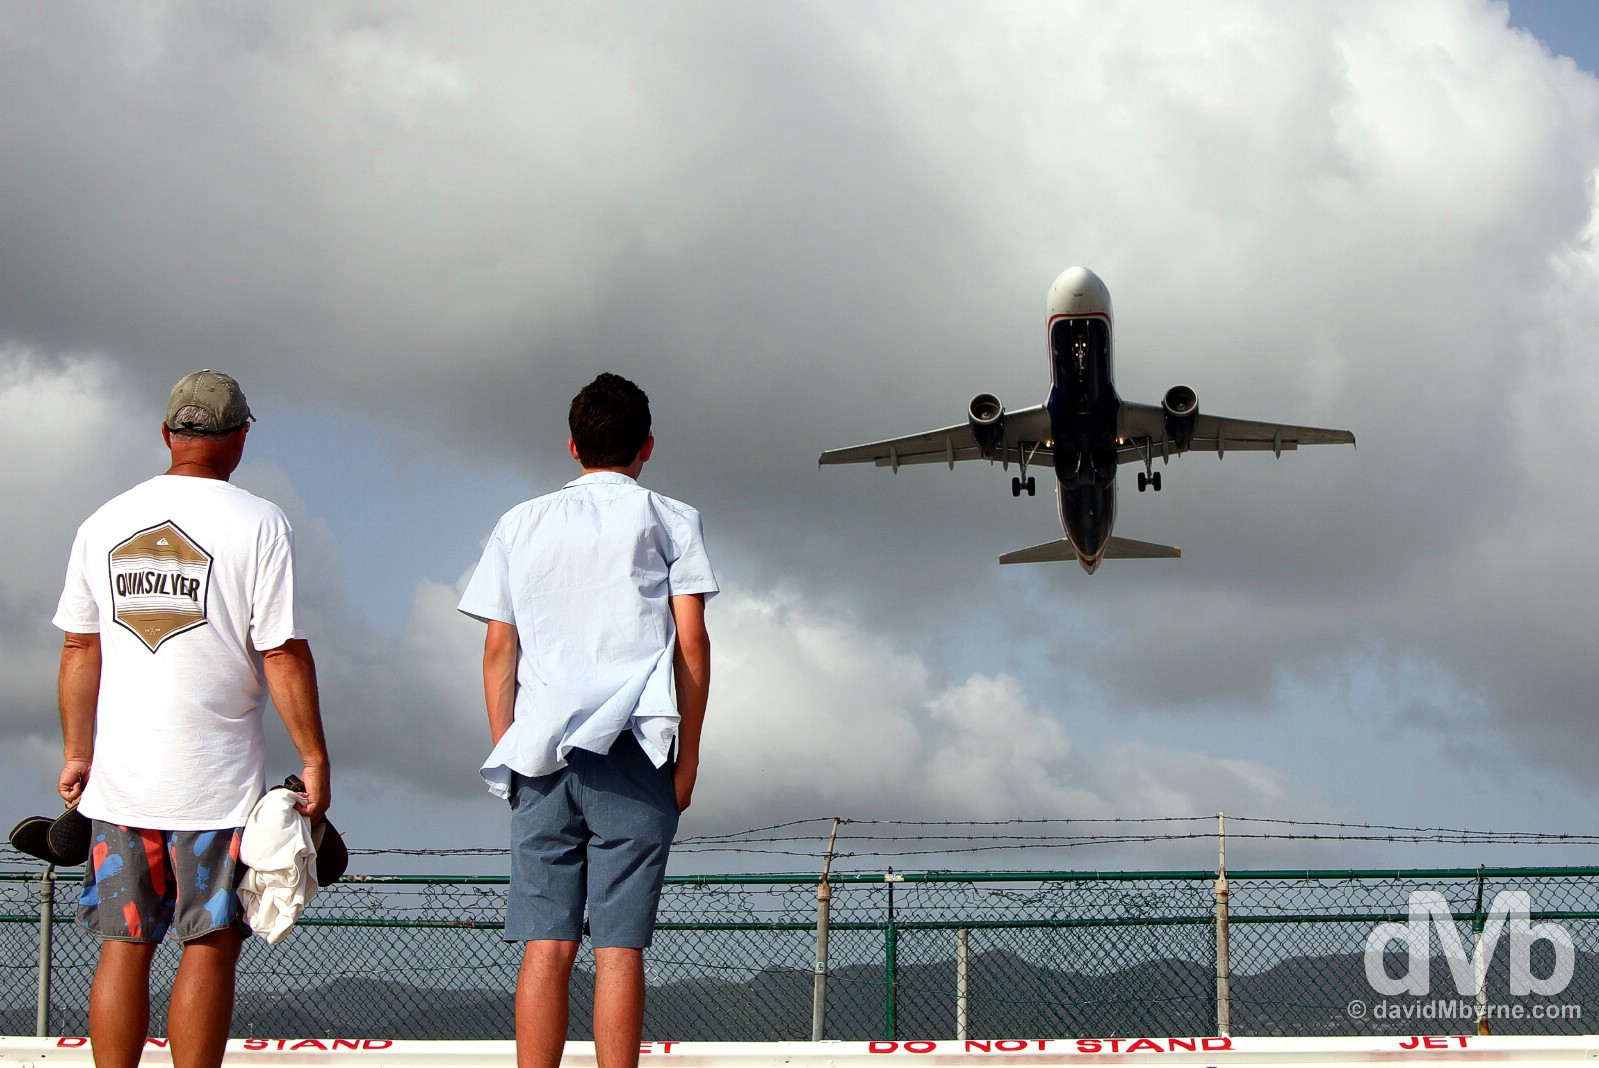 Take-off from Juliana Airport as viewed from Maho Beach, Sint Maarten, Lesser Antilles. June 7, 2015.